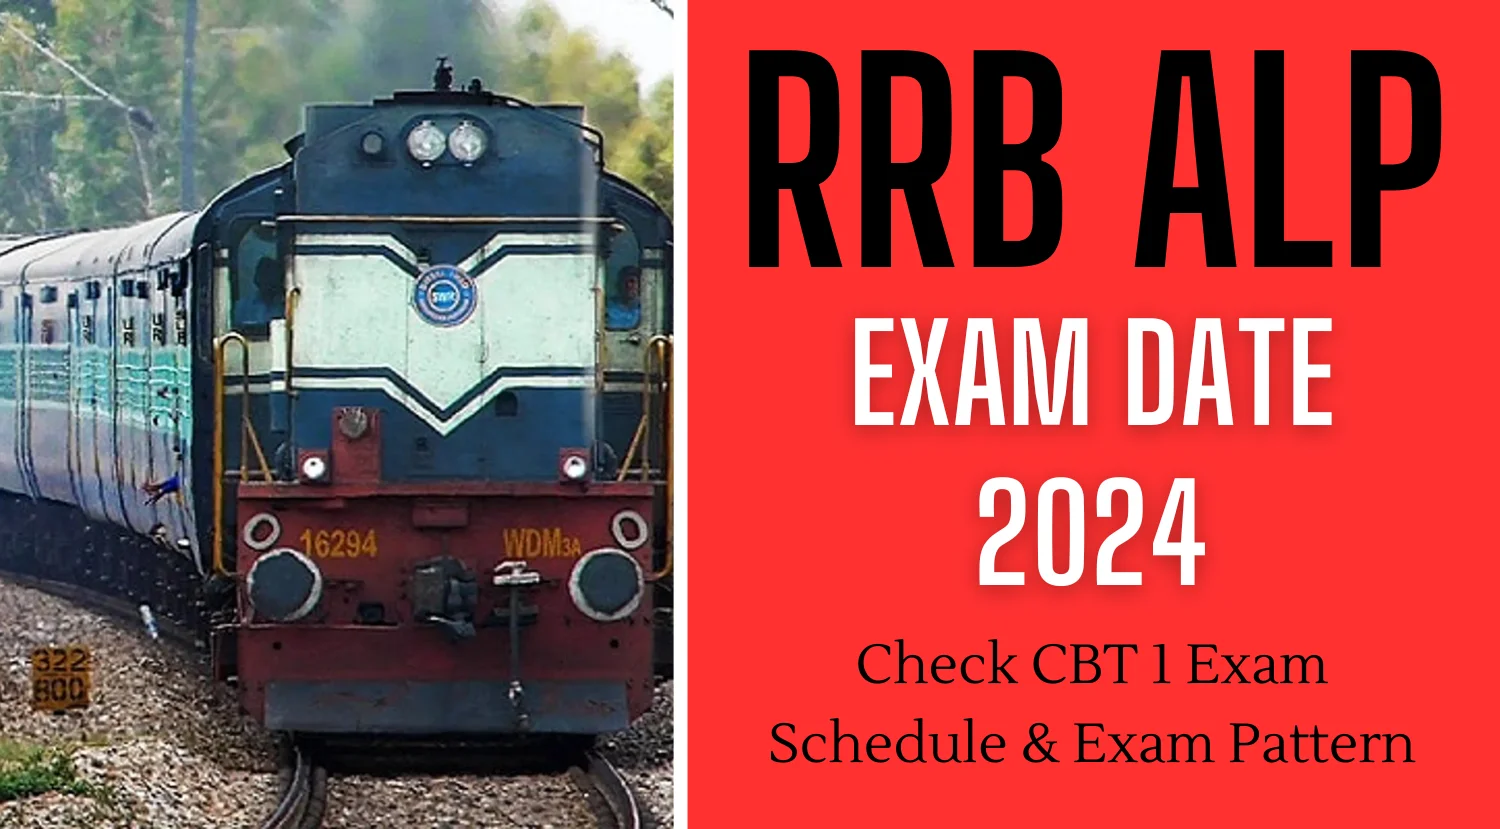 RRB ALP Exam Date 2024 Check CBT 1 Exam Schedule Exam Pattern